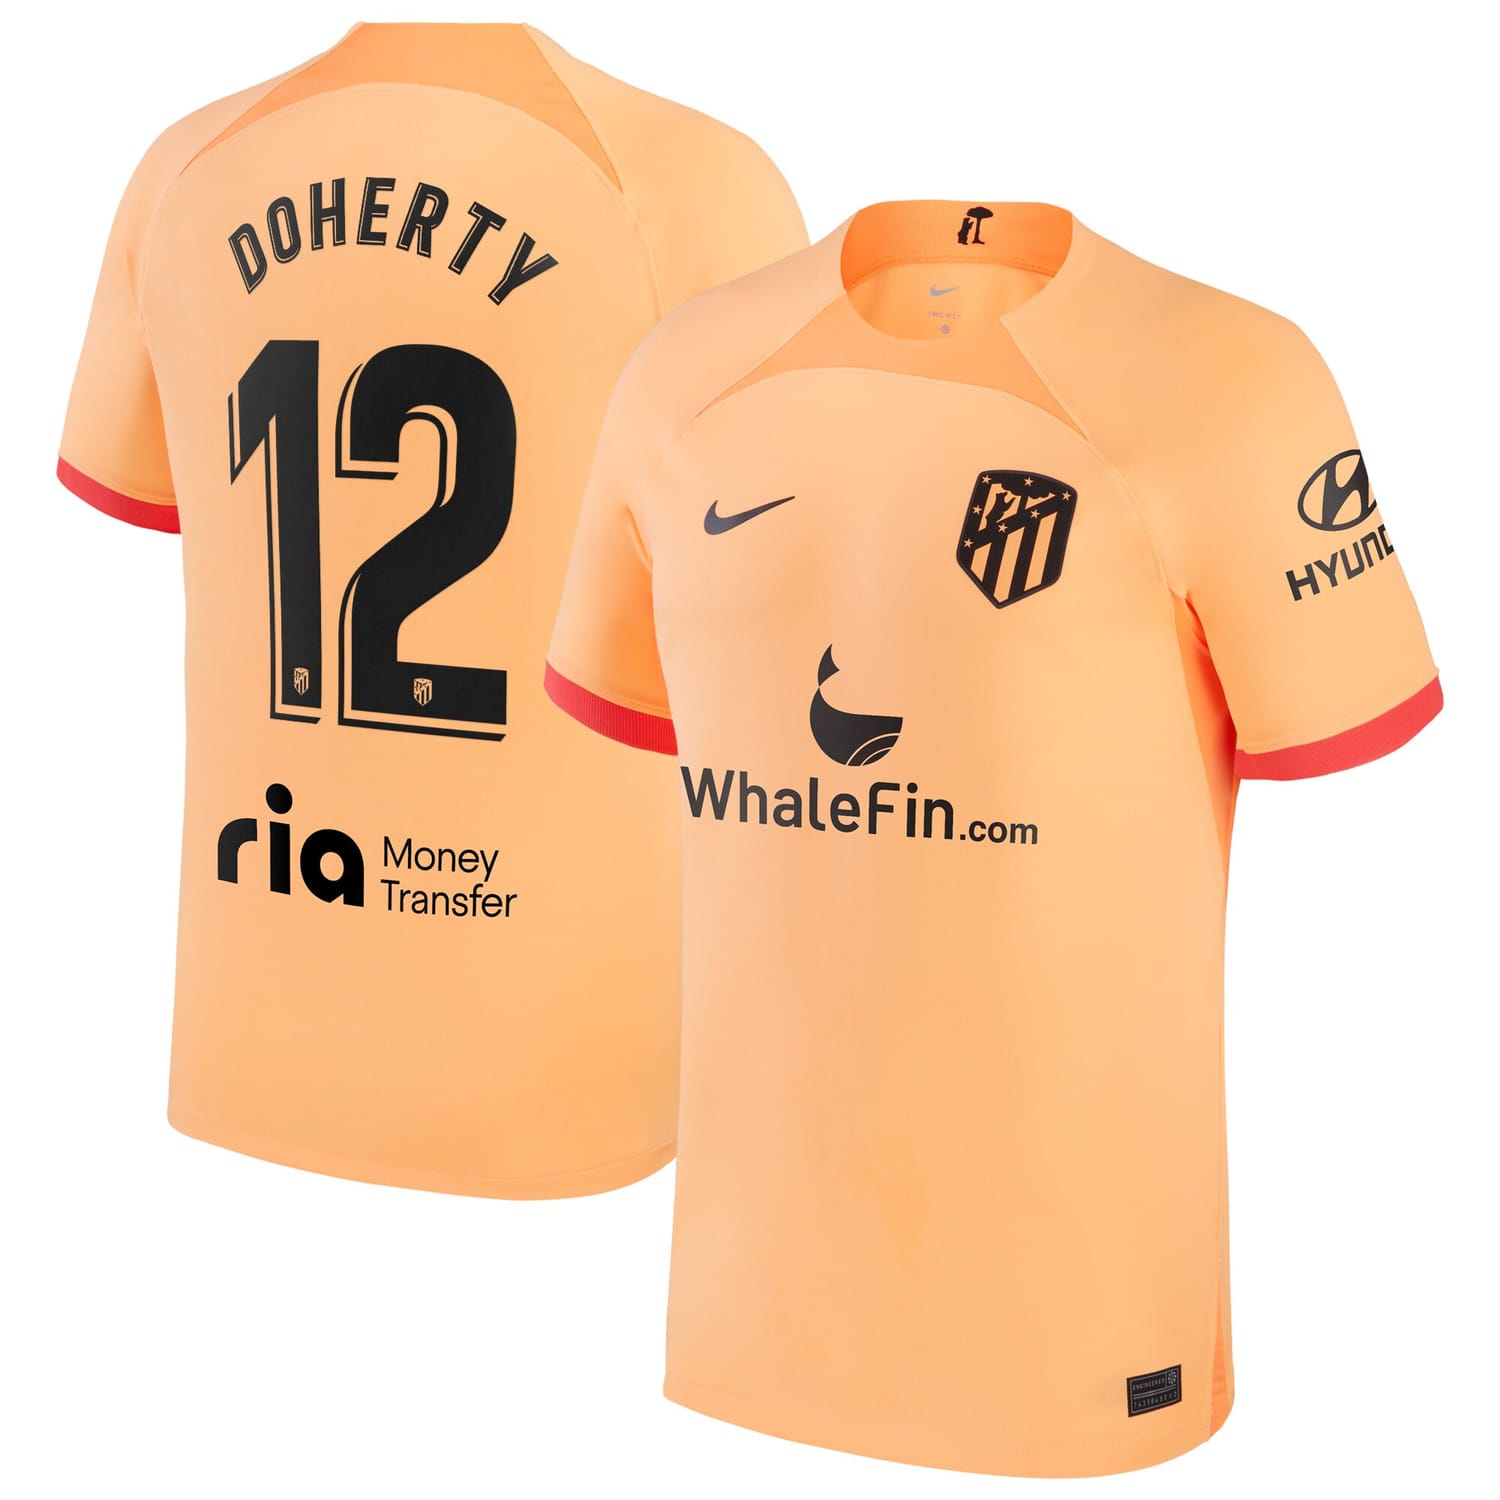 La Liga Atletico de Madrid Third Jersey Shirt 2022-23 player Matt Doherty 12 printing for Men